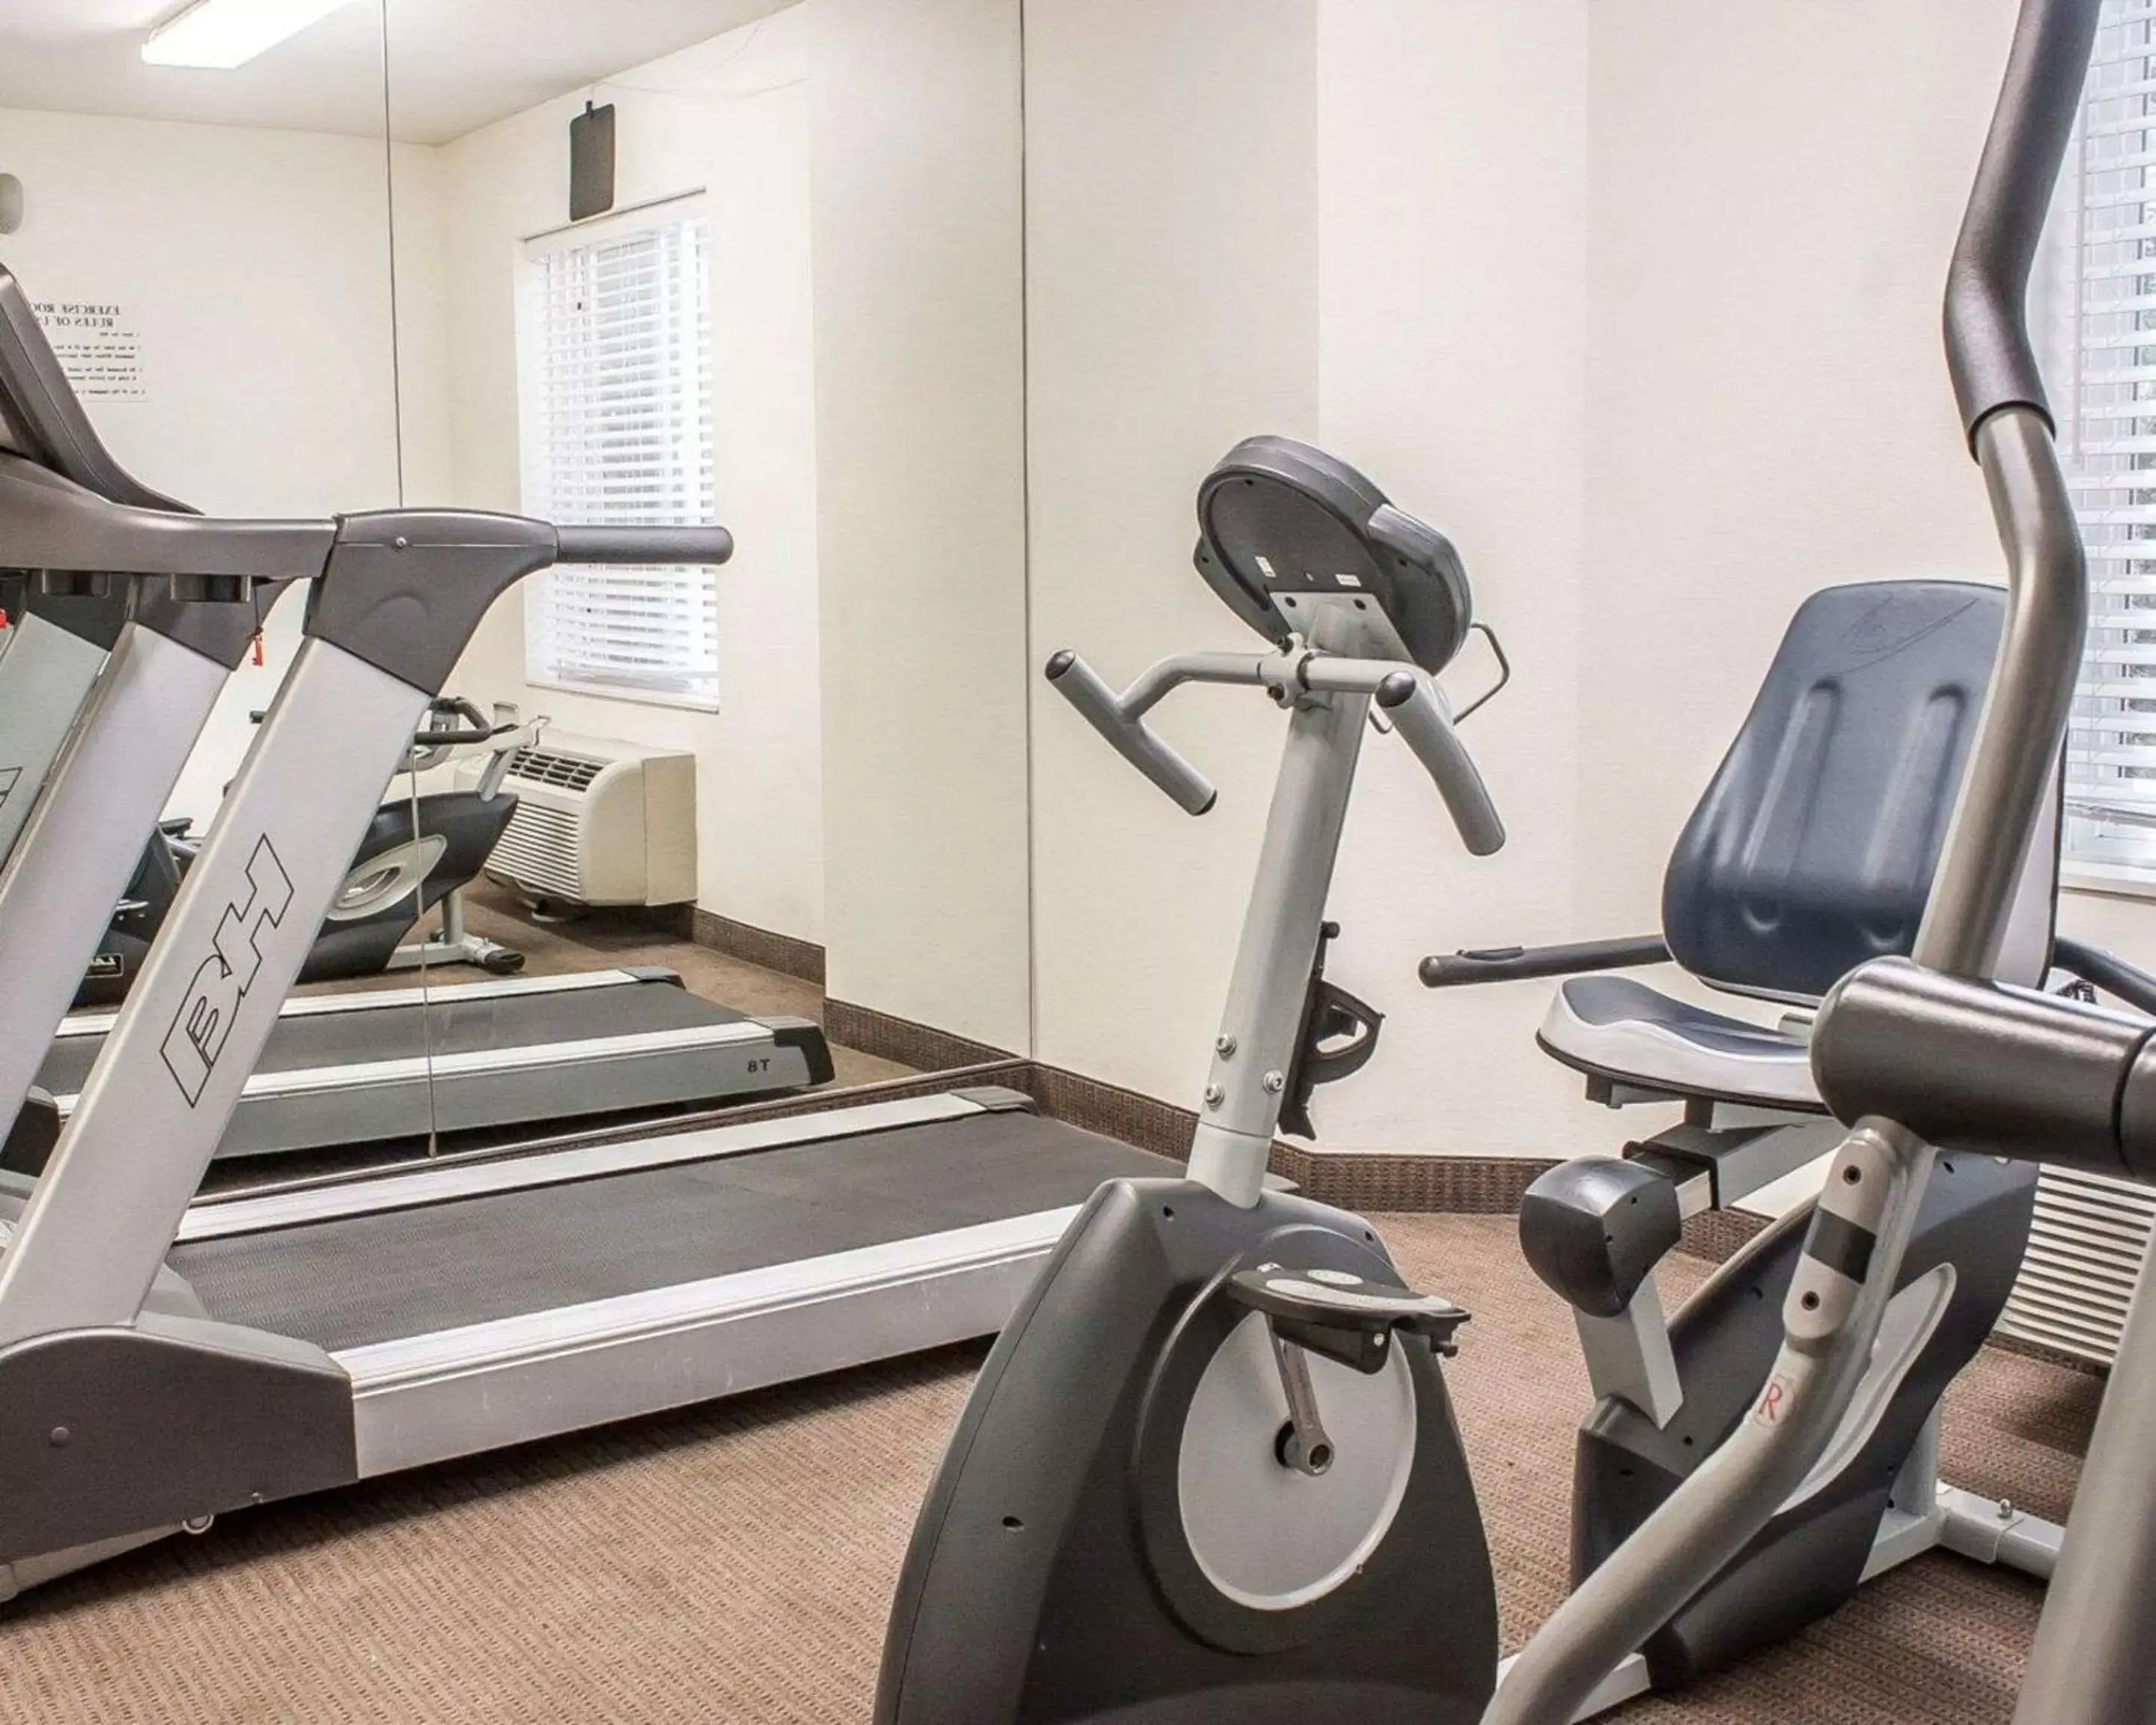 Fitness centre/facilities, Fitness Center/Facilities in Sleep Inn SeaTac